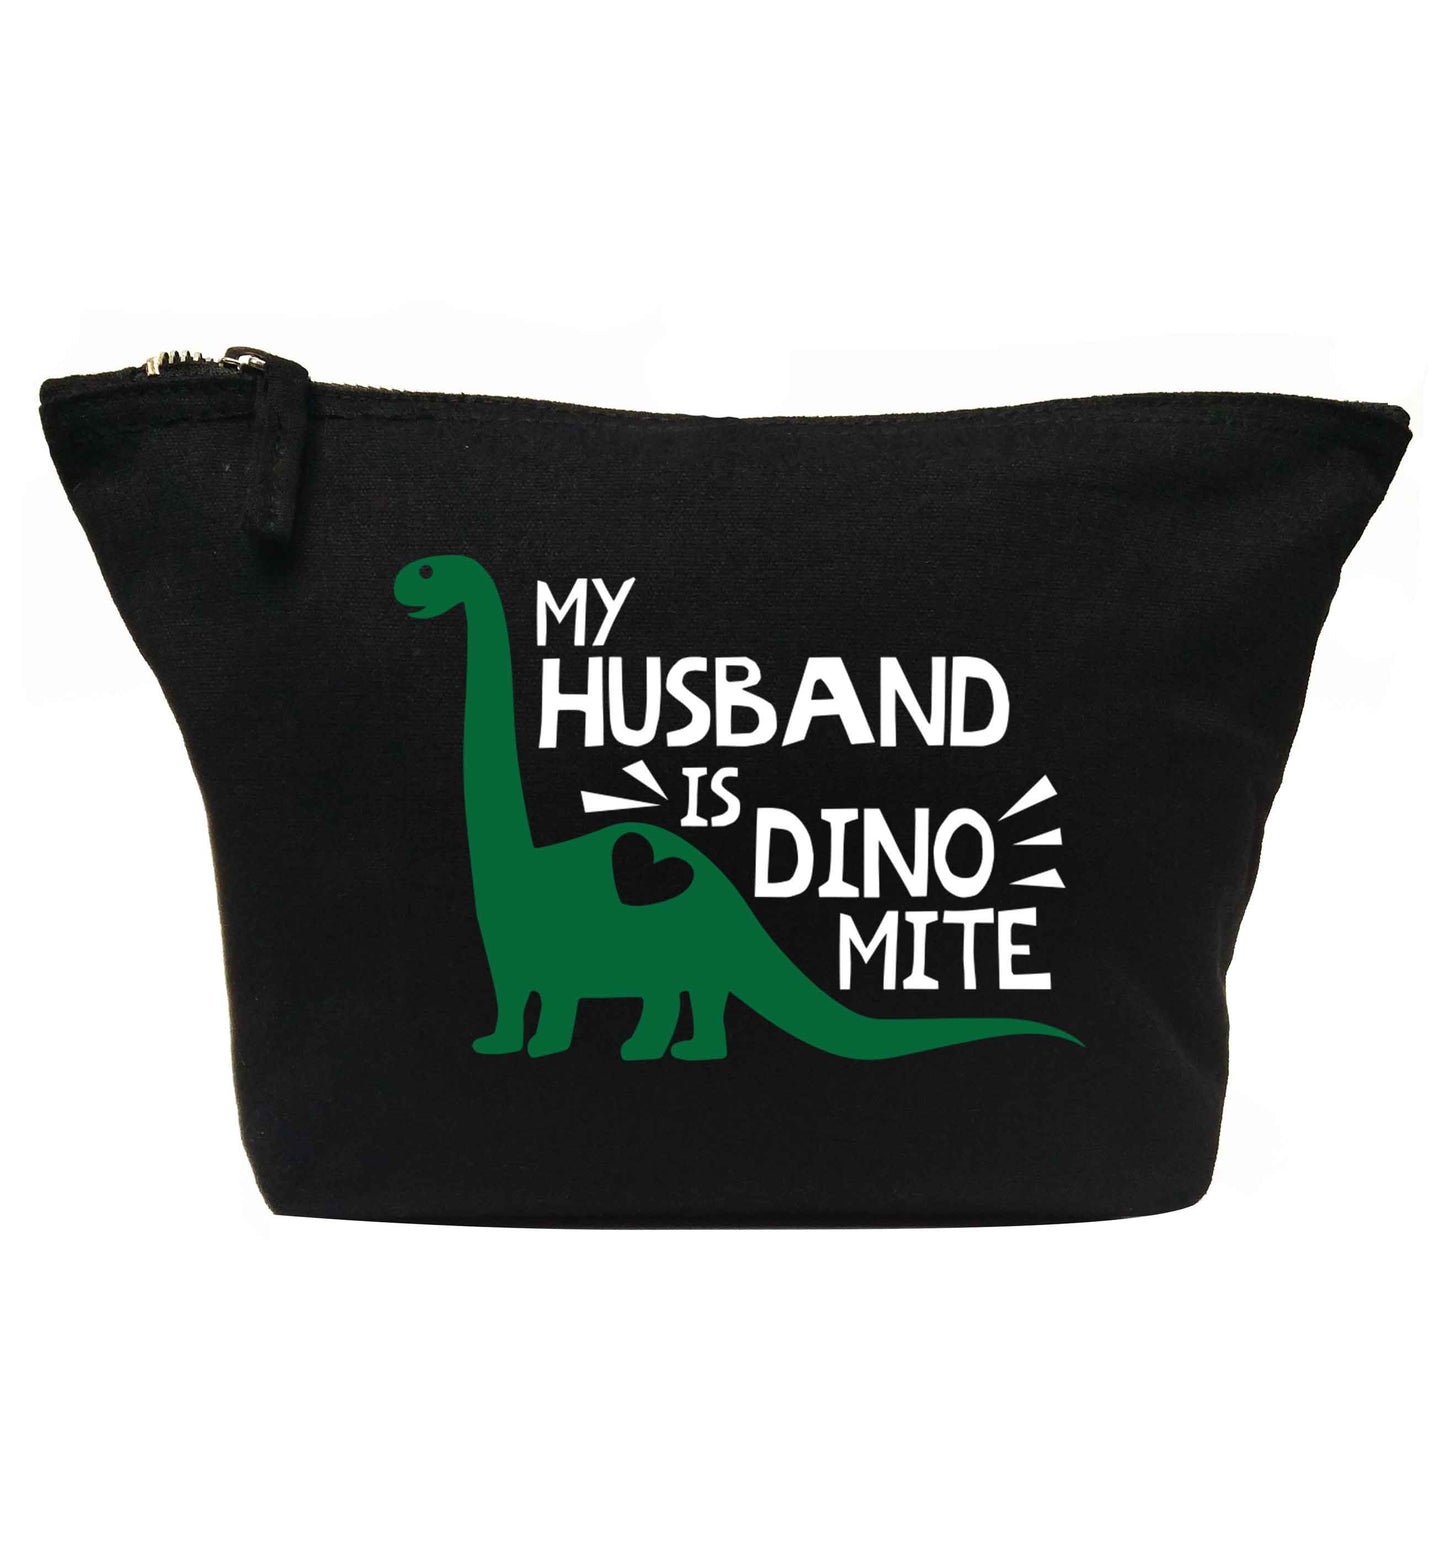 My husband is dinomite! | makeup / wash bag